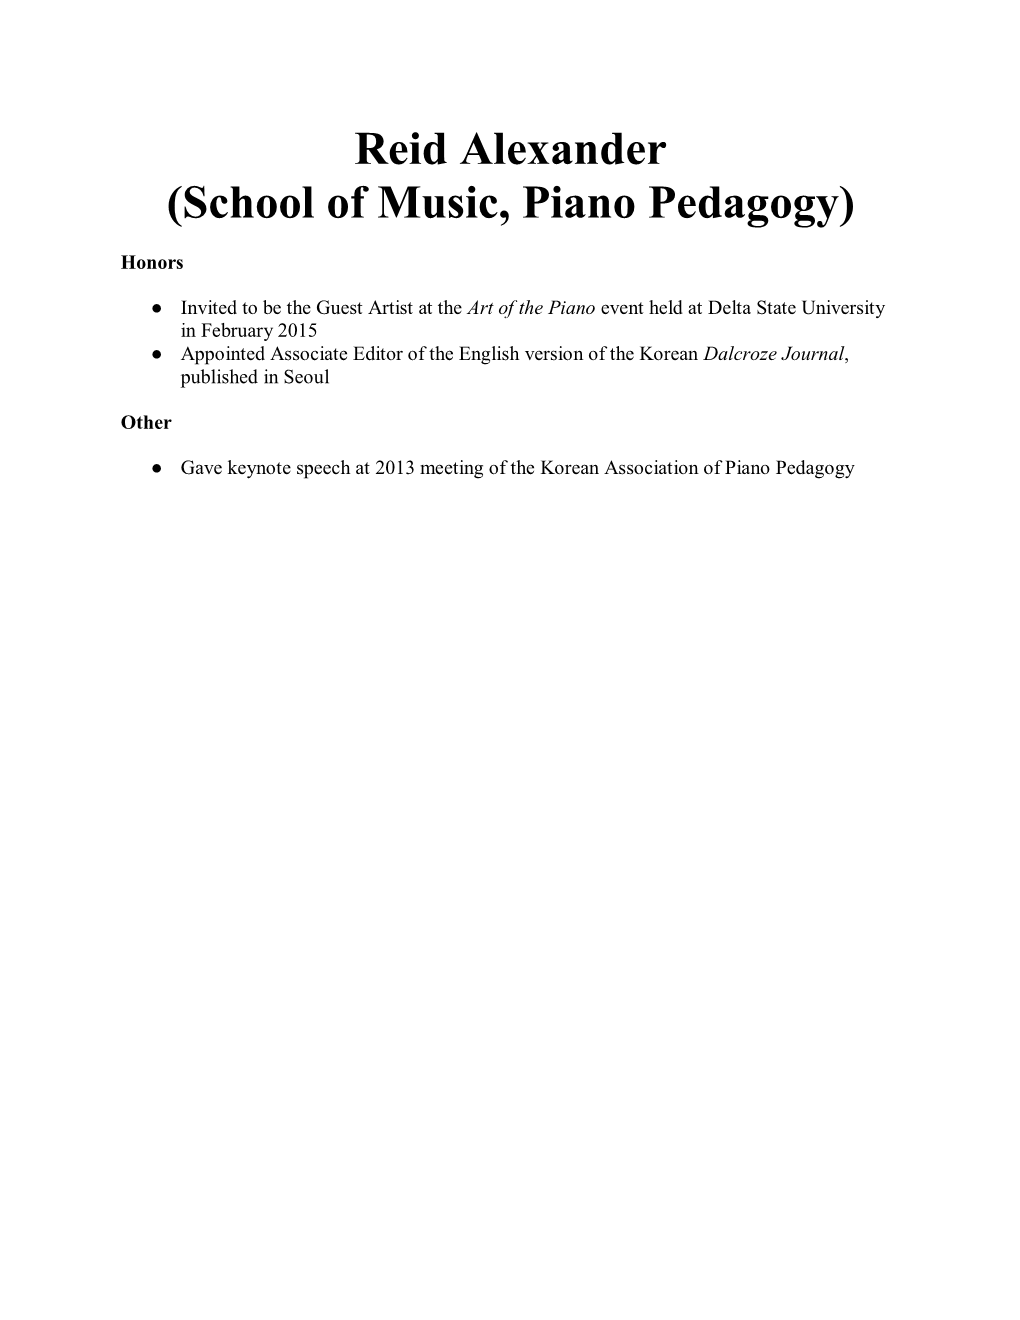 Reid Alexander (School of Music, Piano Pedagogy)